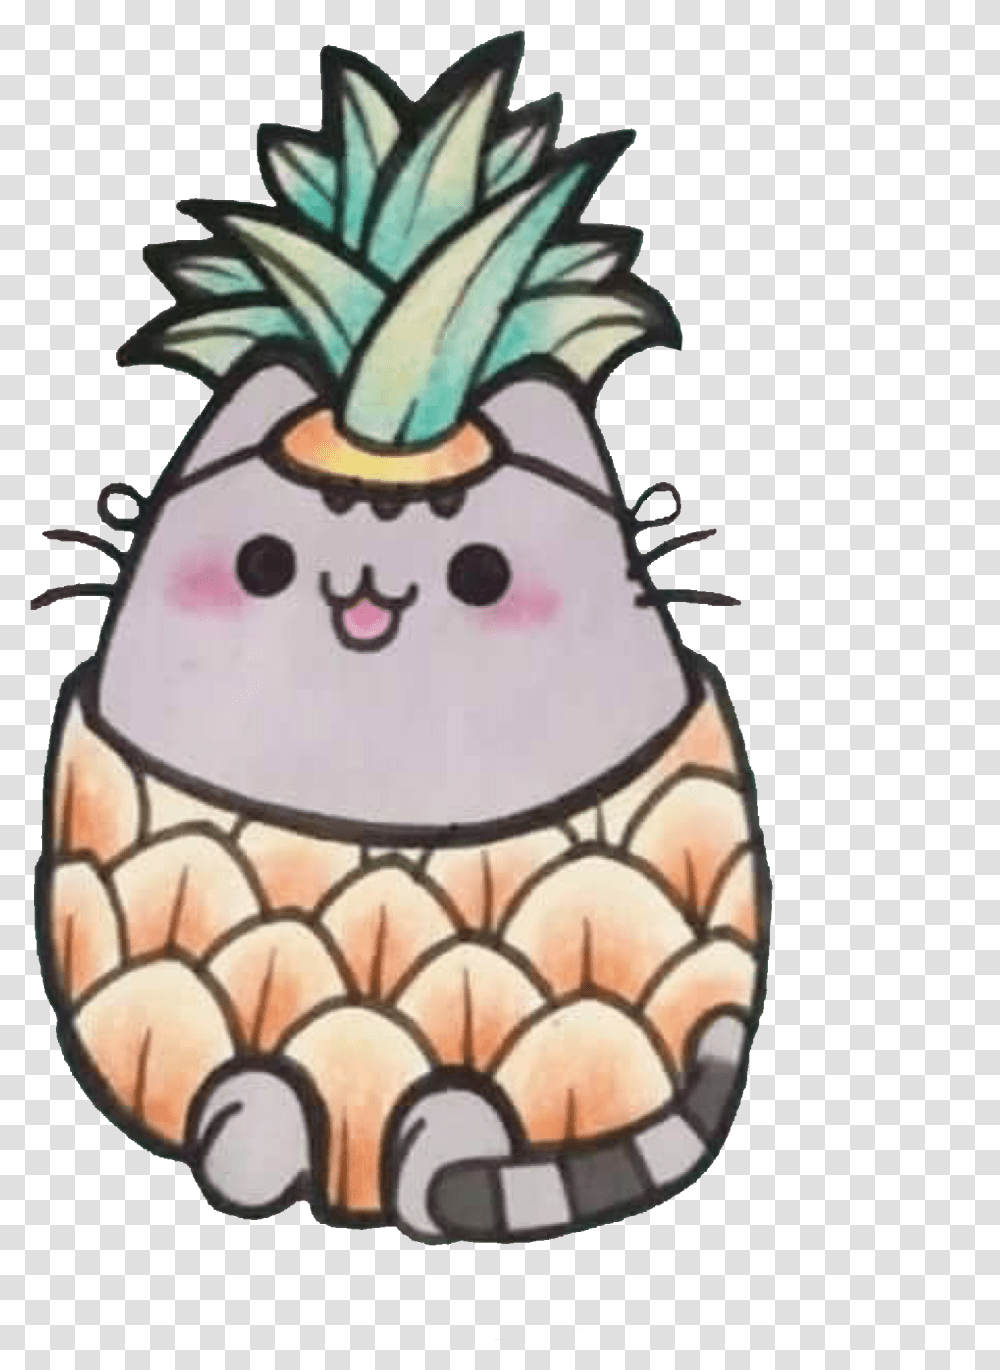 Download Pineapple Pusheen Cute Cat Kitty Kitten Costume Aww Kawaii Pusheen, Plant, Food, Fruit, Vegetable Transparent Png